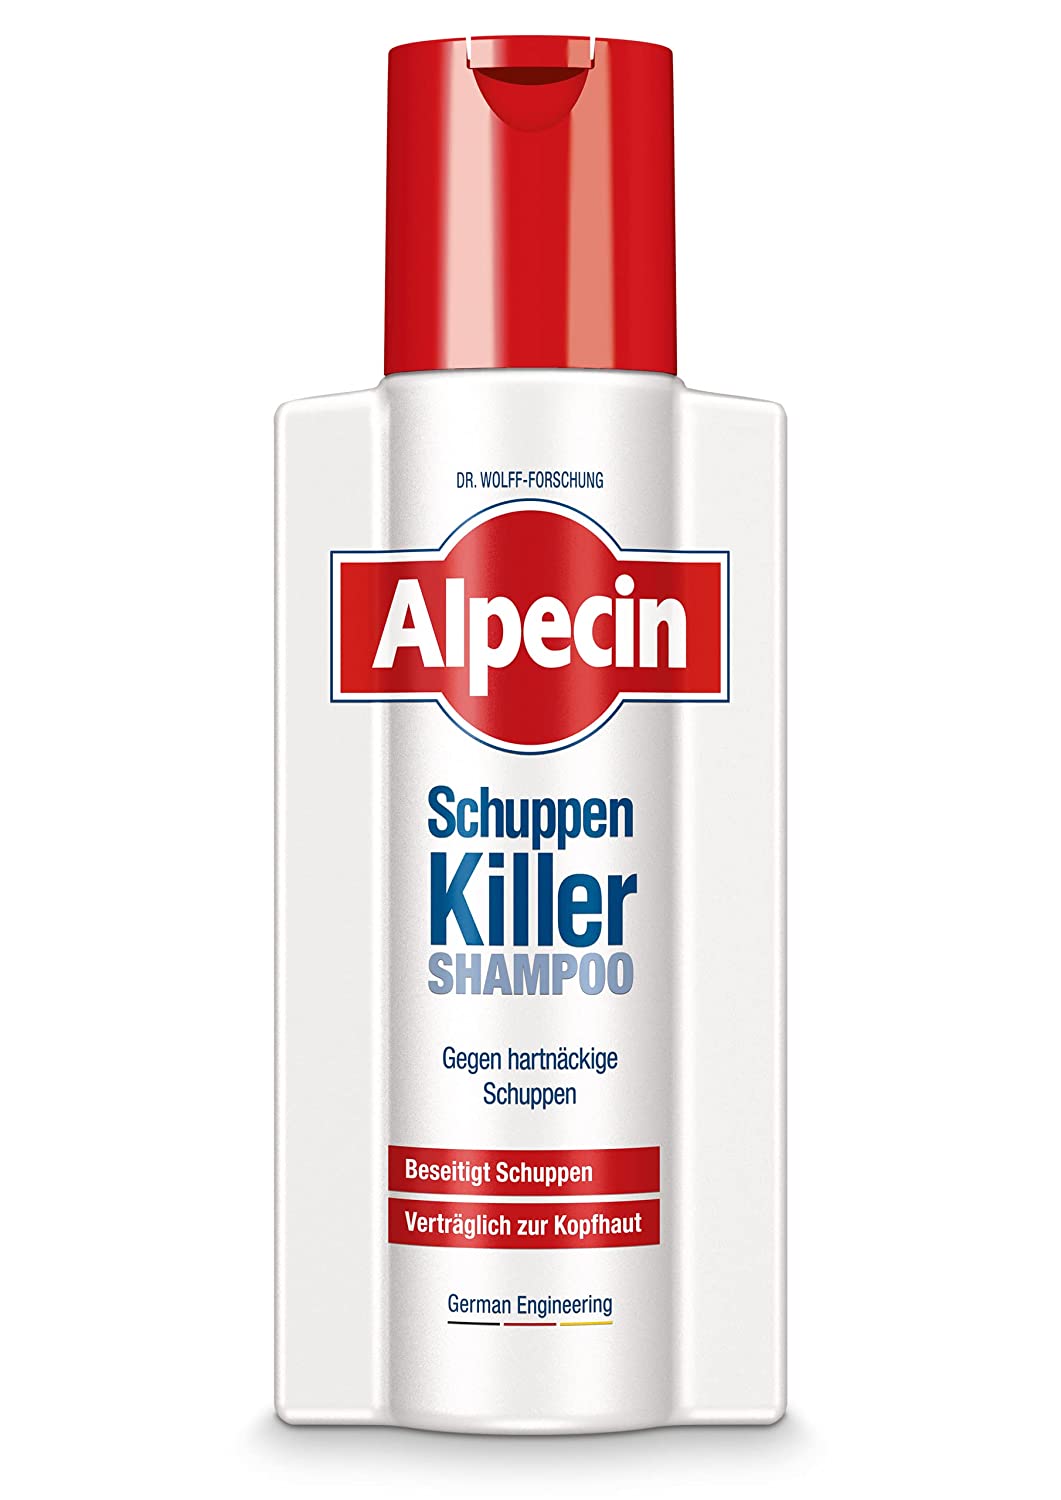 Alpecin Dandruff Killer Shampoo - 1 x 250ml - Anti-Dandruff Shampoo for Men - Kills Dandruff and Prevents Oily Dandruff - Silicone Free